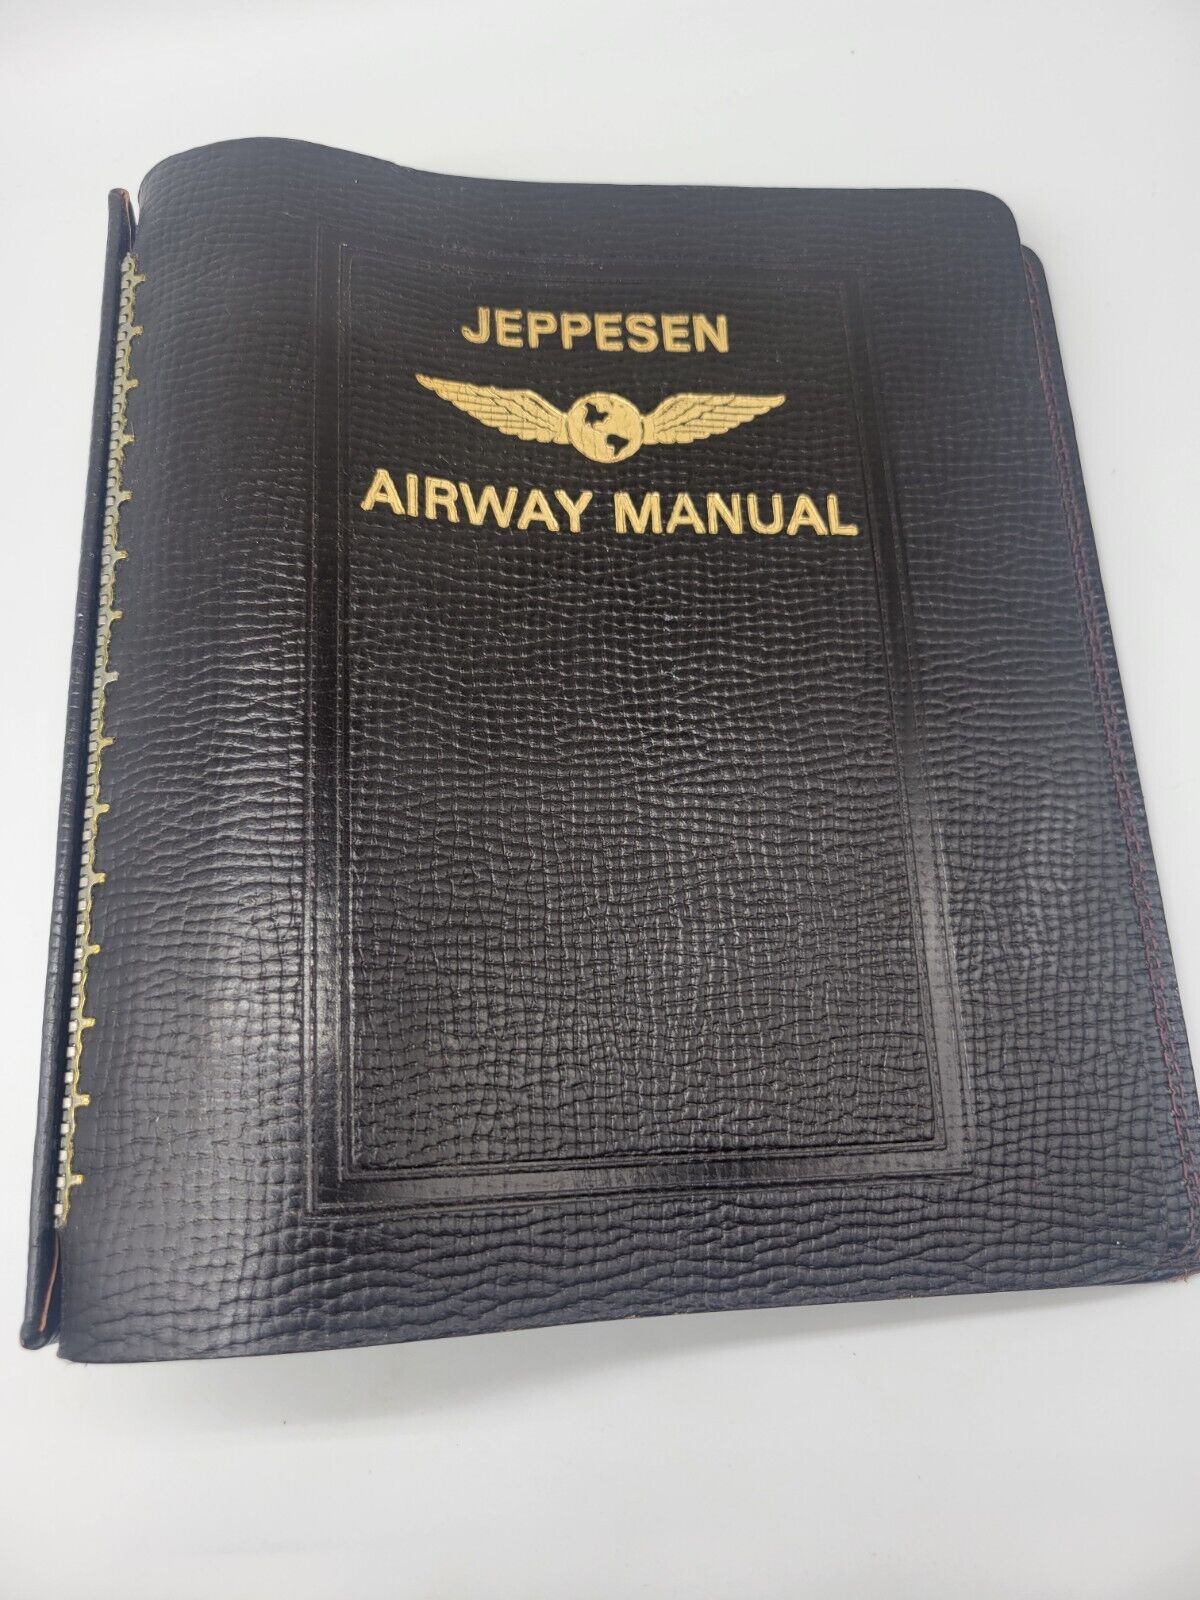 Vintage Jeppesen Airway Manual Leather  Binder in Very Nice Vintage Condition 